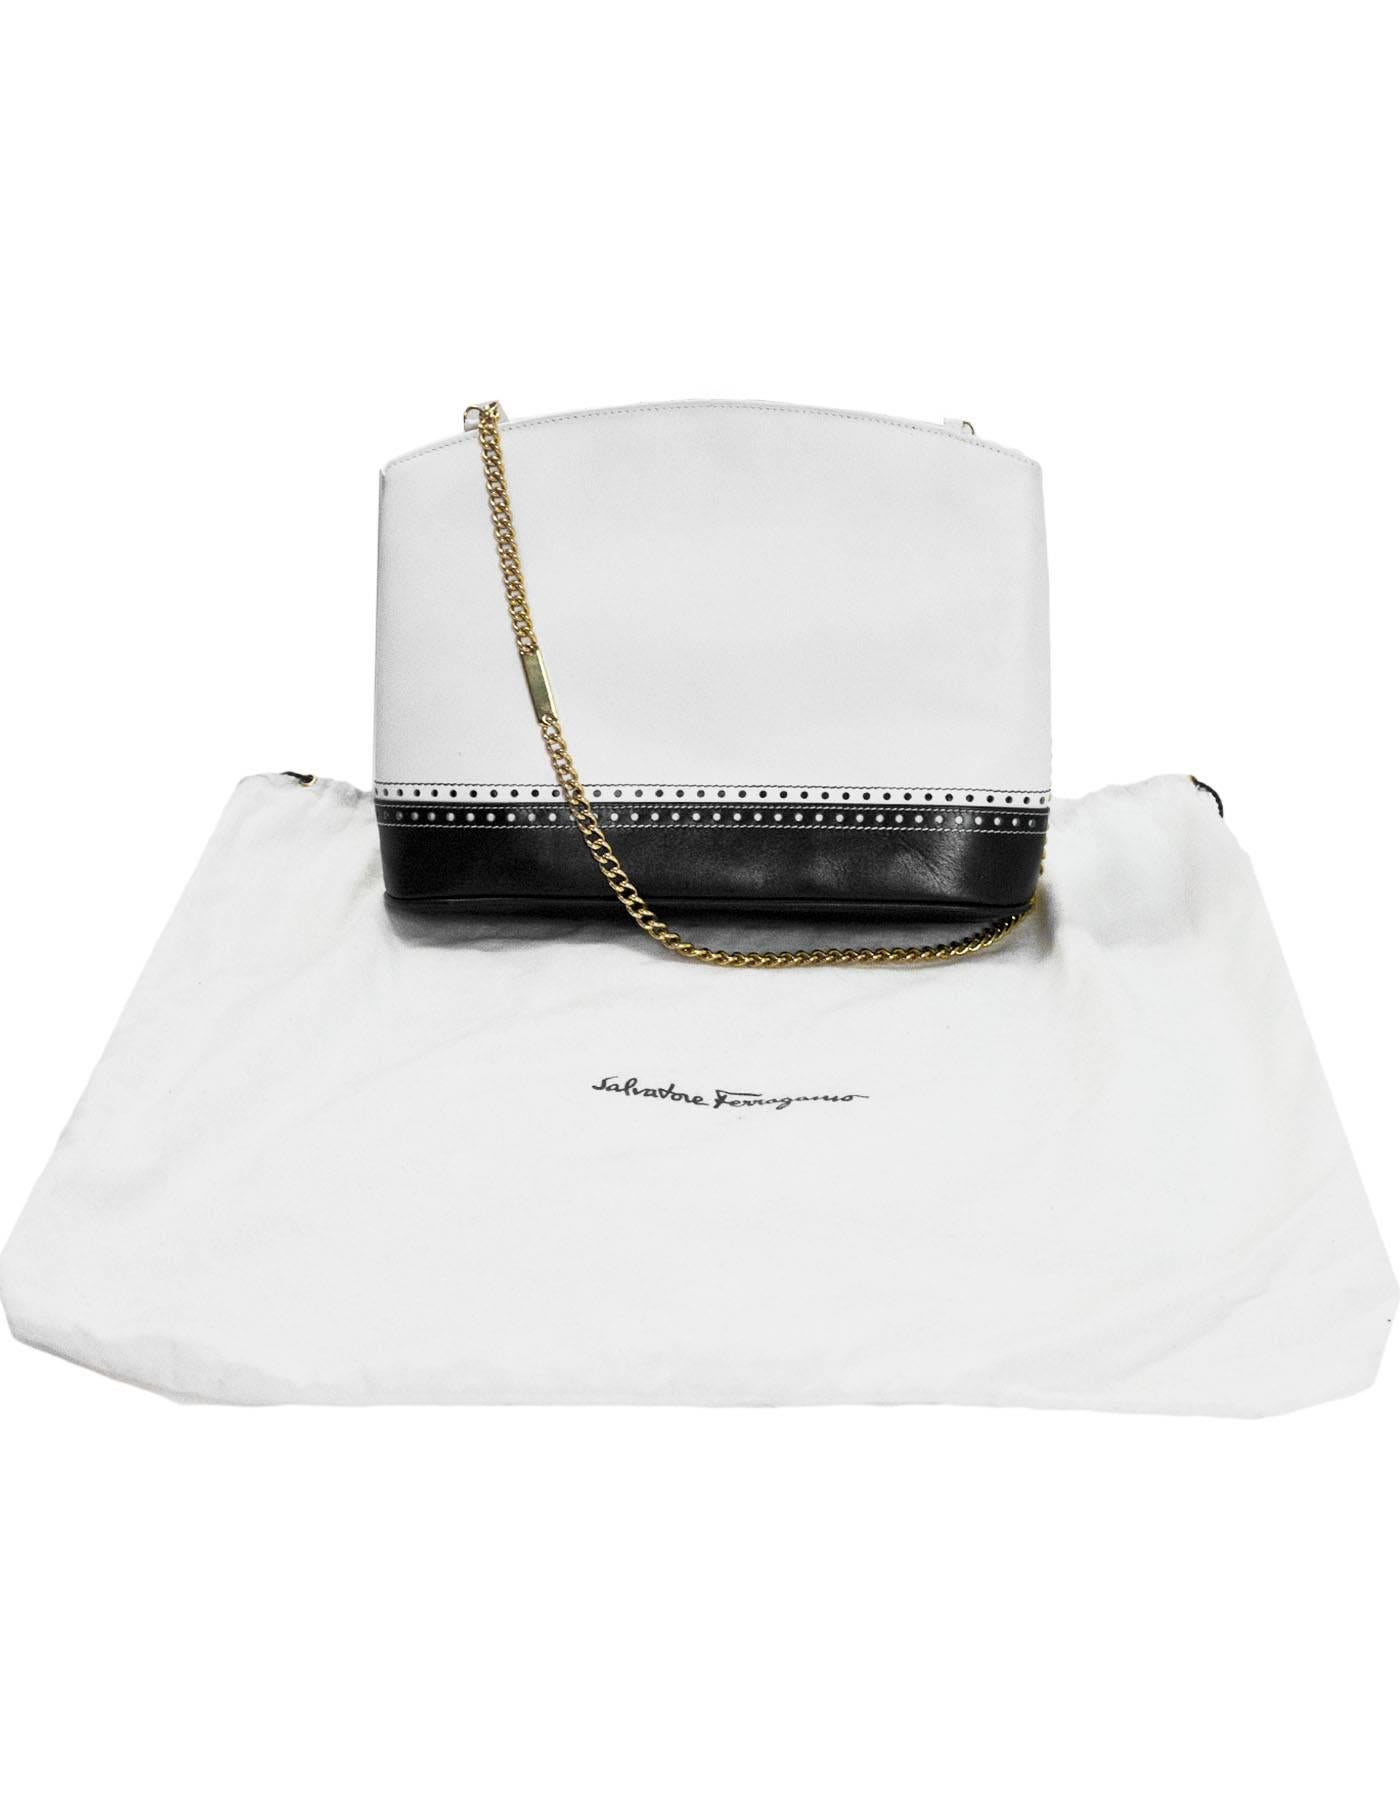 Salvatore Ferragamo White & Navy Leather Crossbody Bag w/ Dust Bag 4